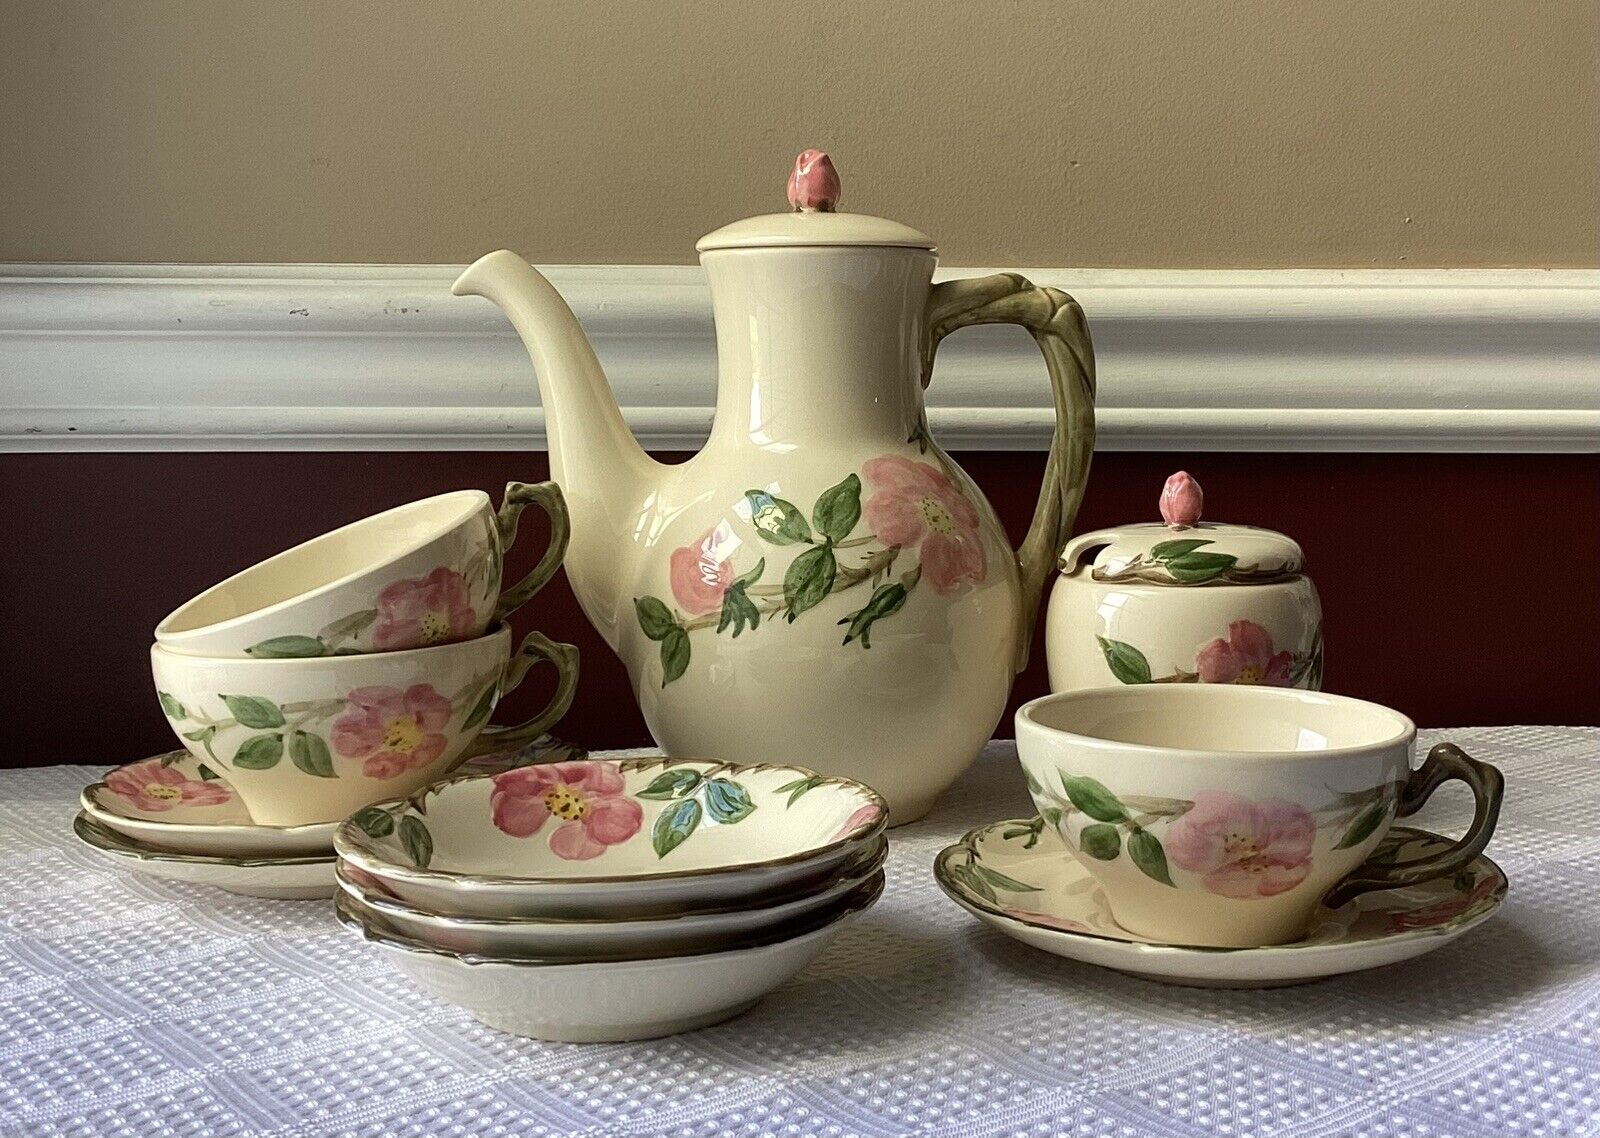 Vintage 13-piece Franciscan Ware Tea & Dessert Service For 3, Made In USA